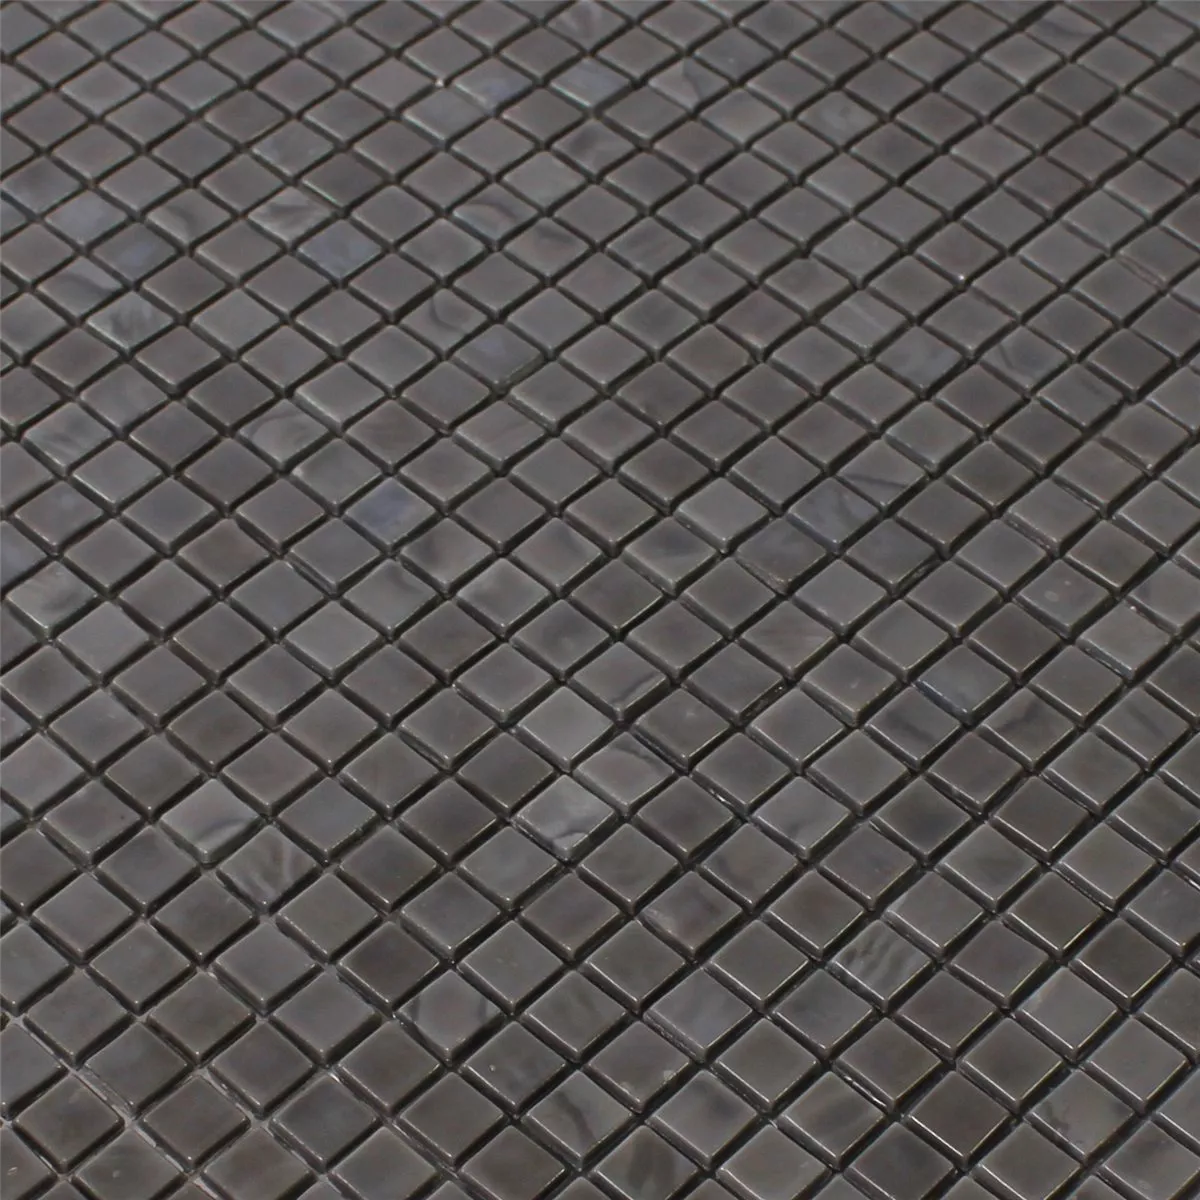 Sample Mosaic Tiles Glass Graphit Uni